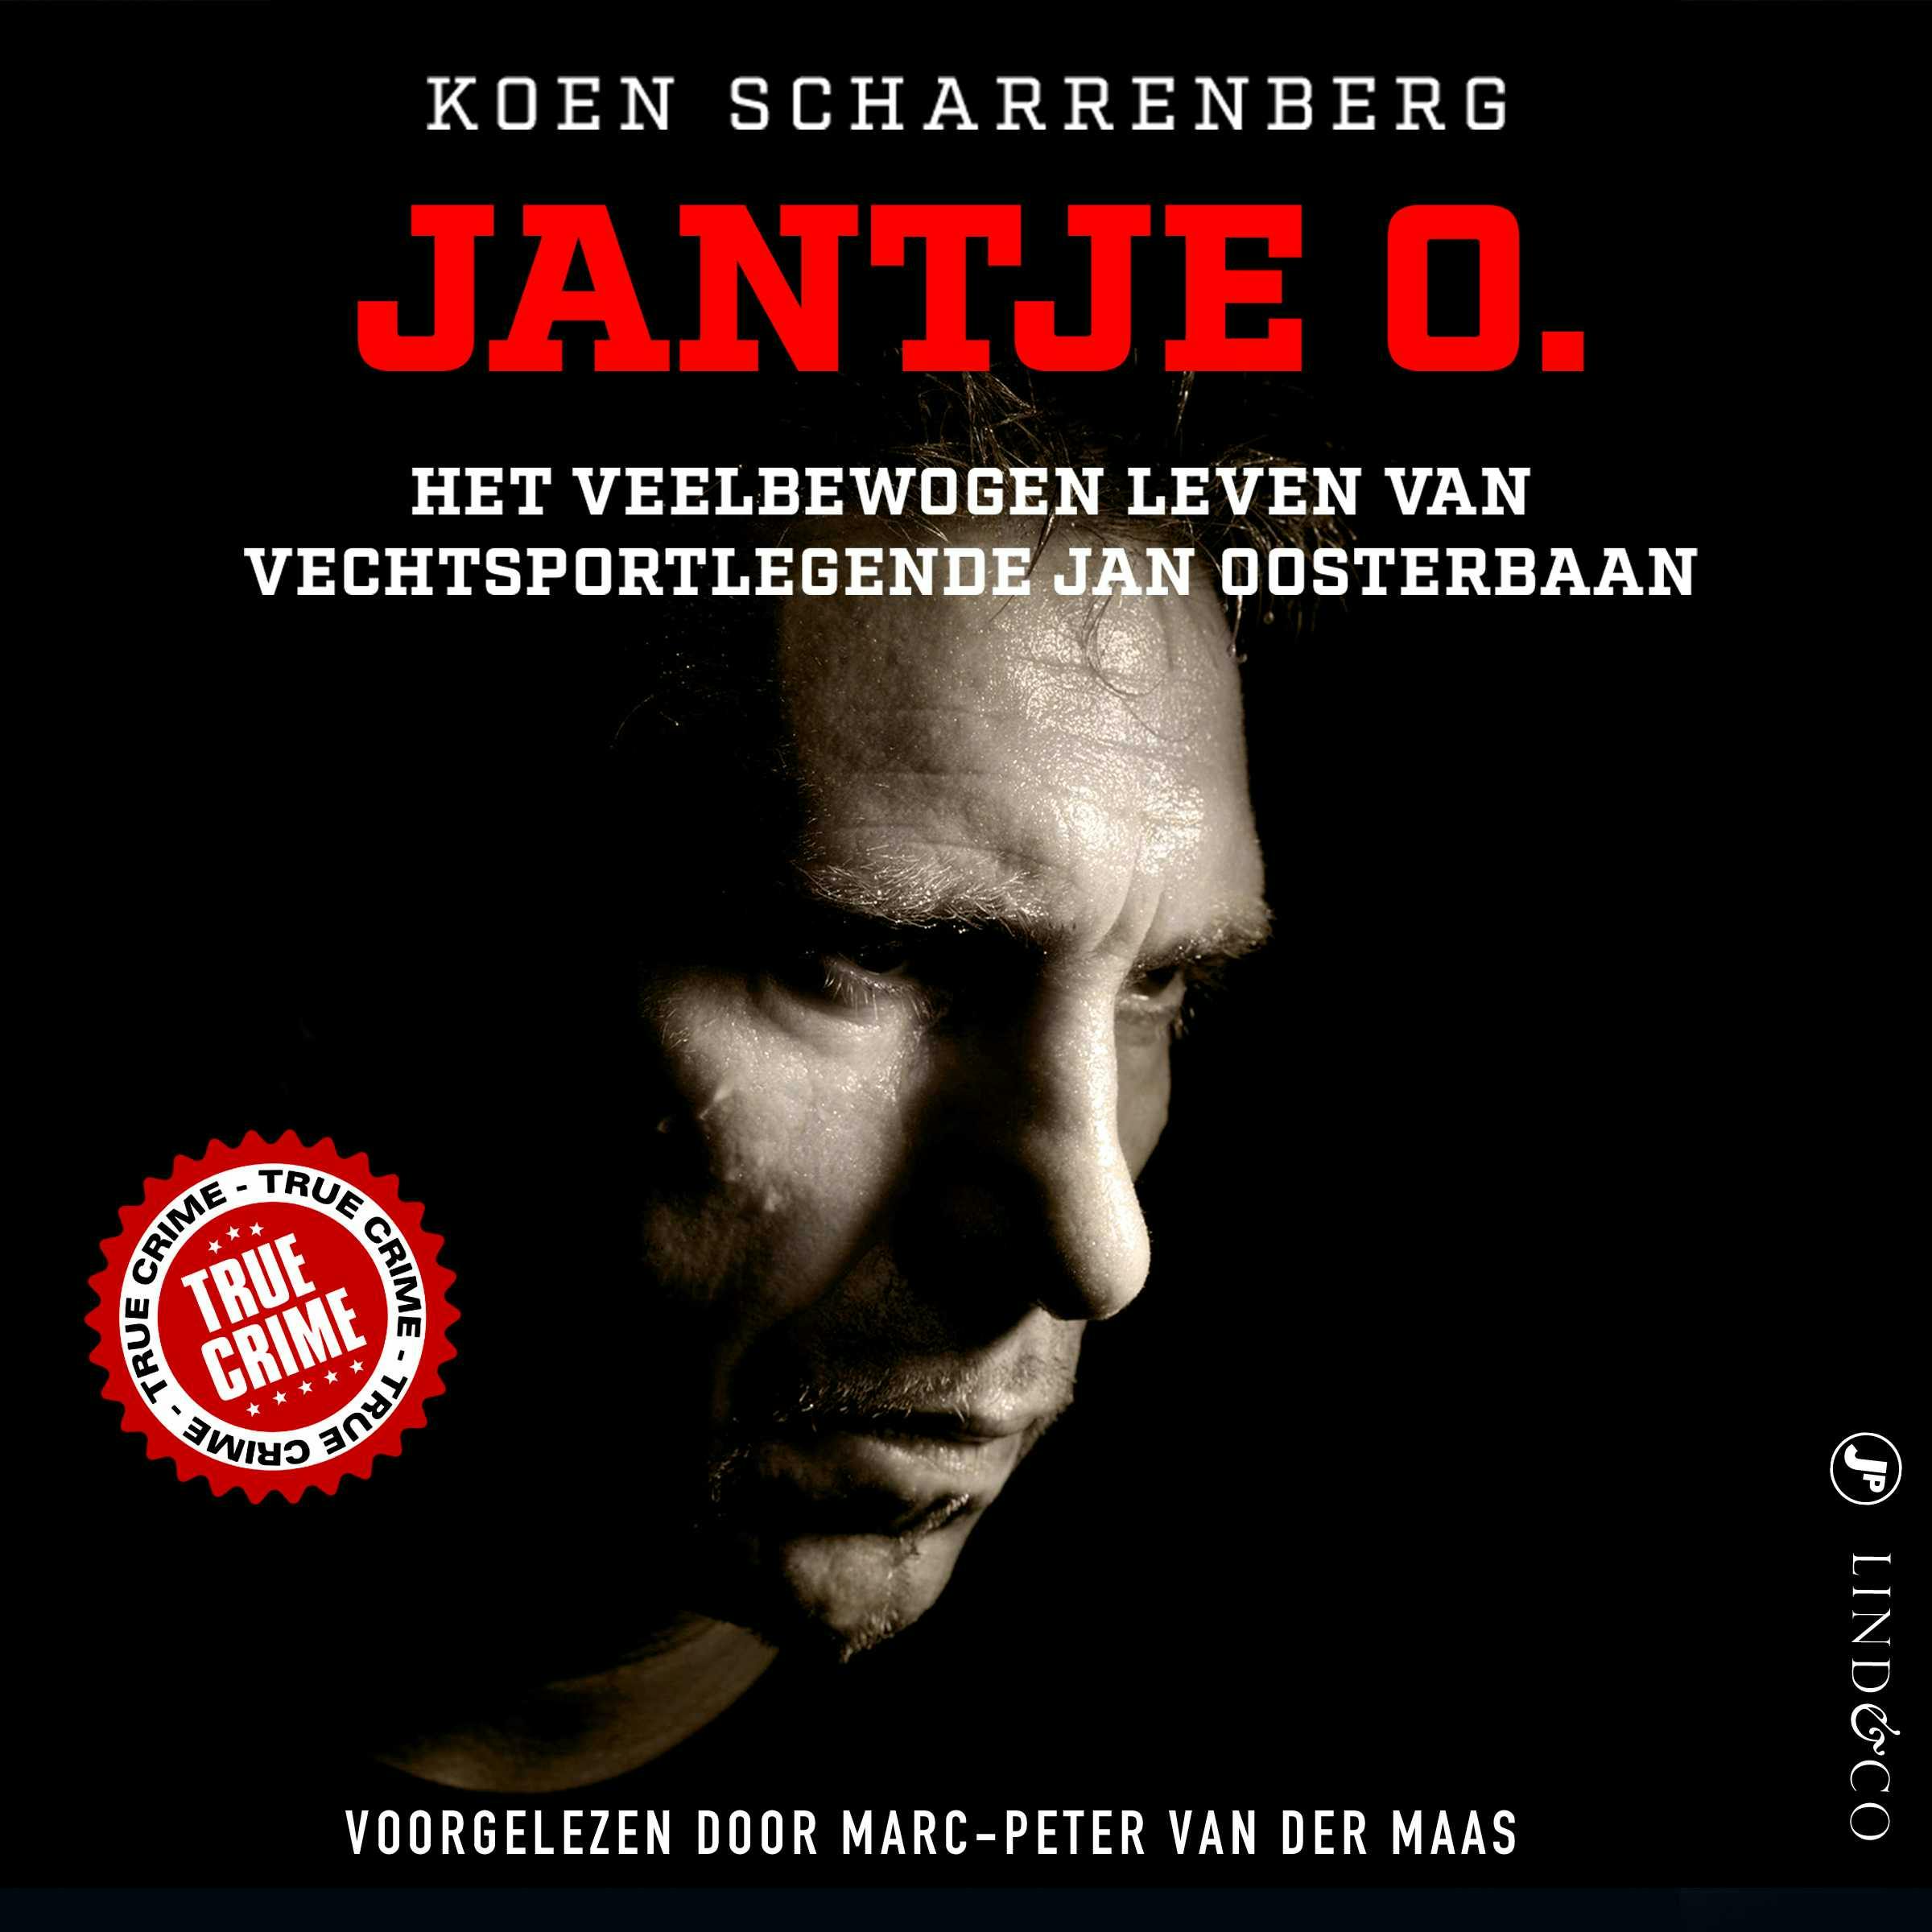 Jantje O. - undefined